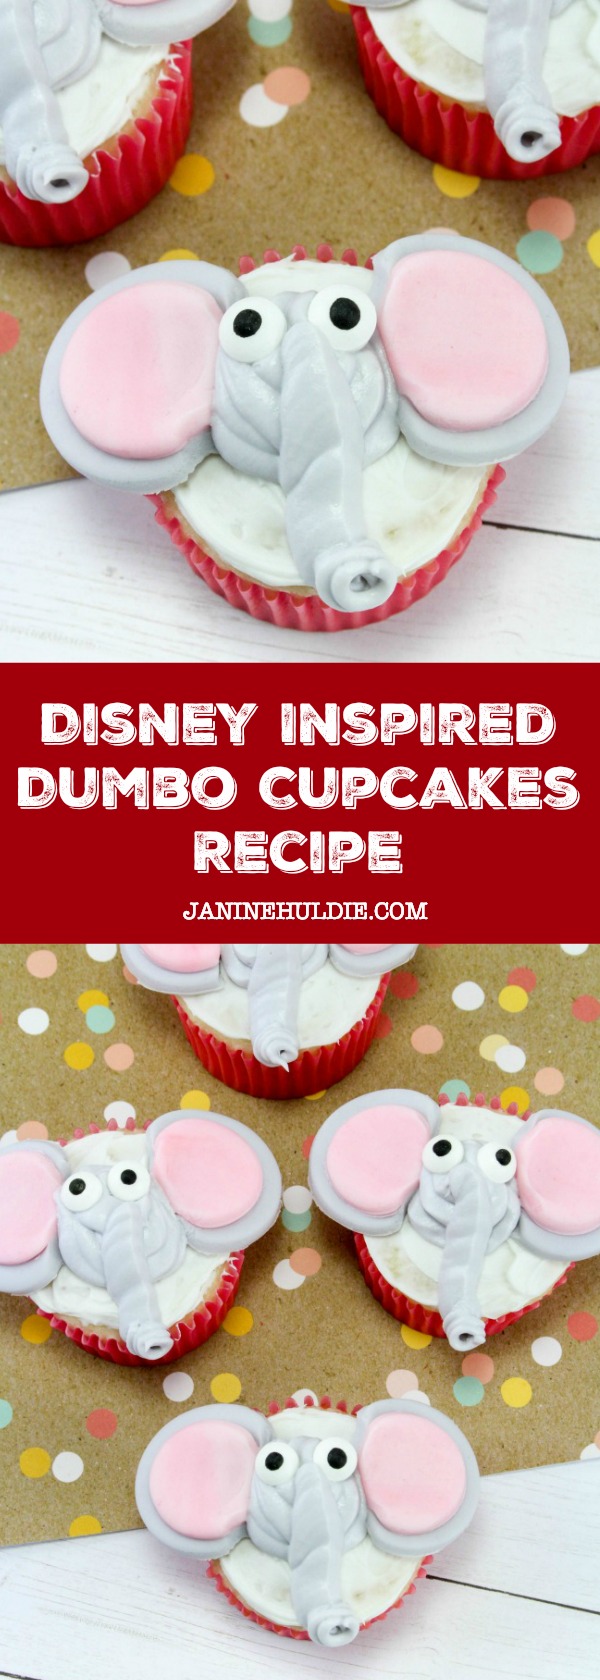 Disney Inspired Dumbo Cupcakes Recipe